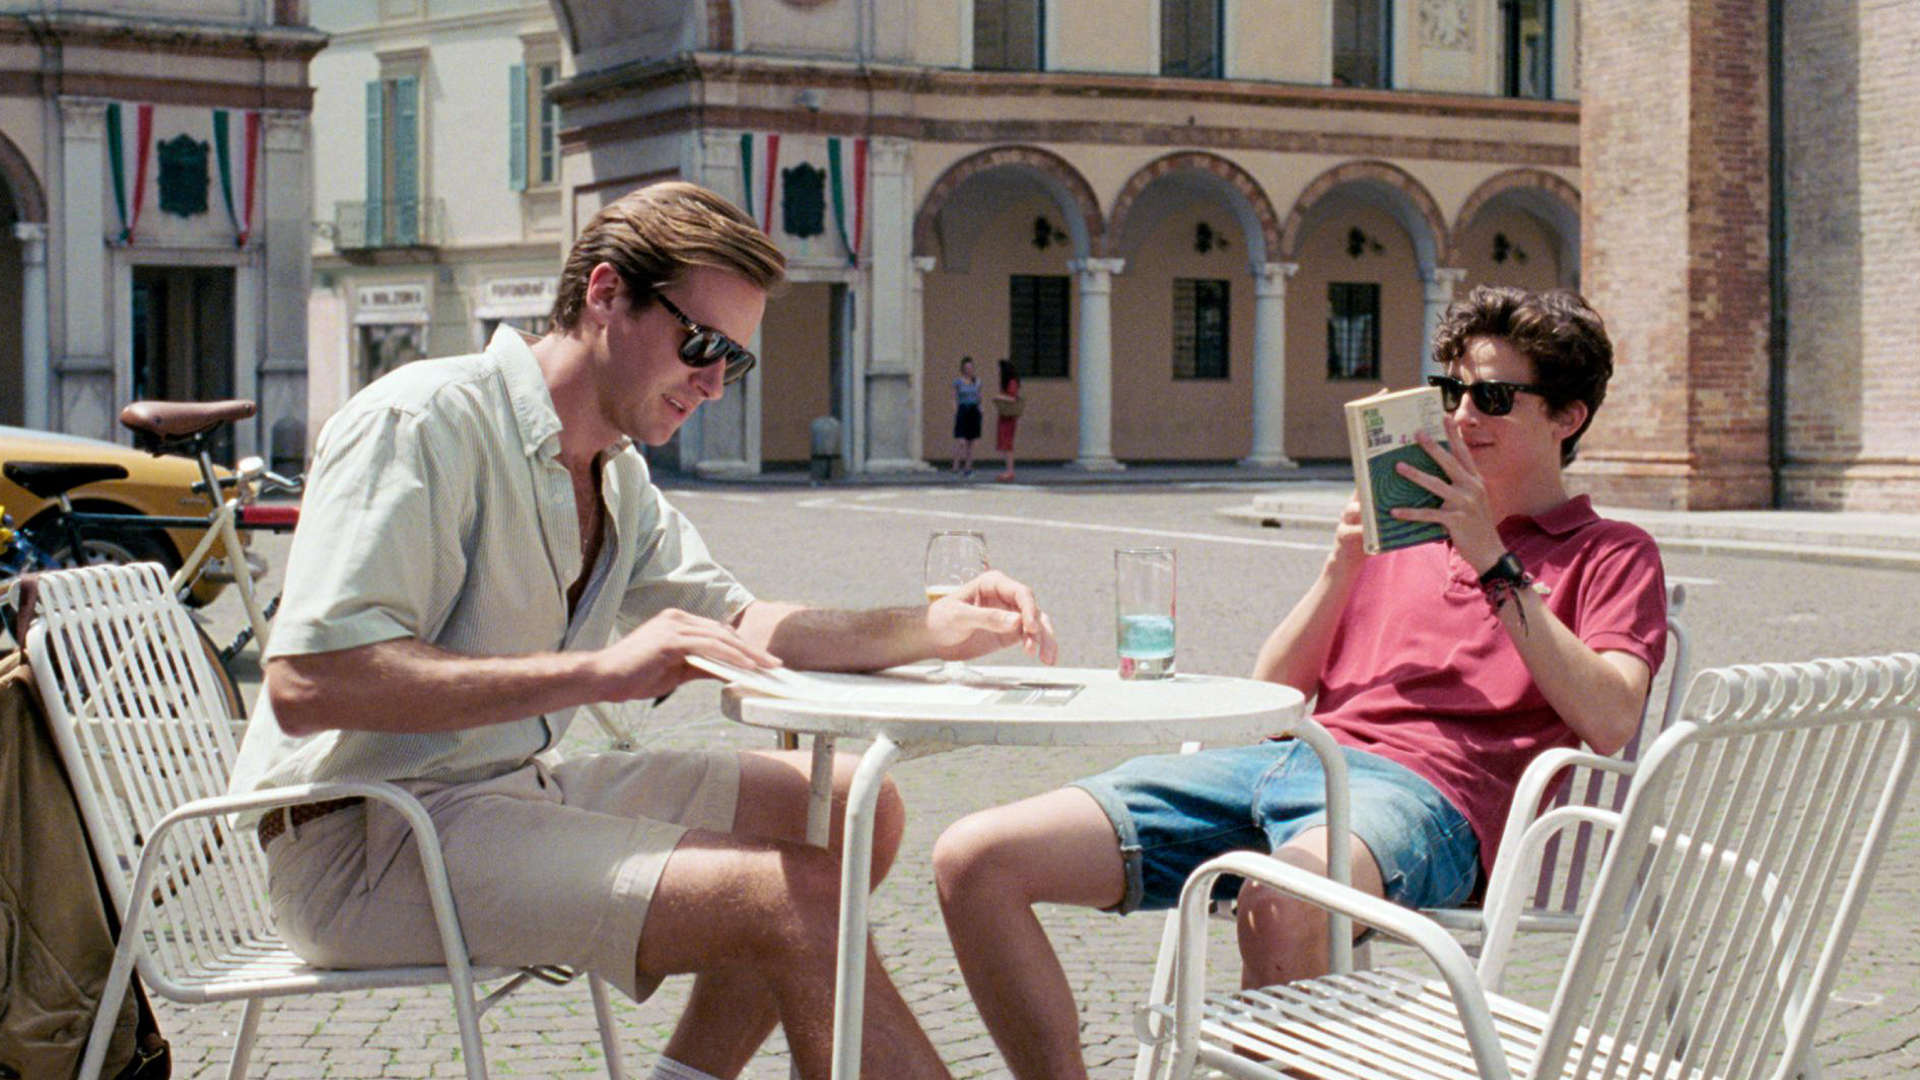 Nädala parim film: ostke Luca Guadagnino itaalia draama “Call me by your name” 9,90 R $ eest!